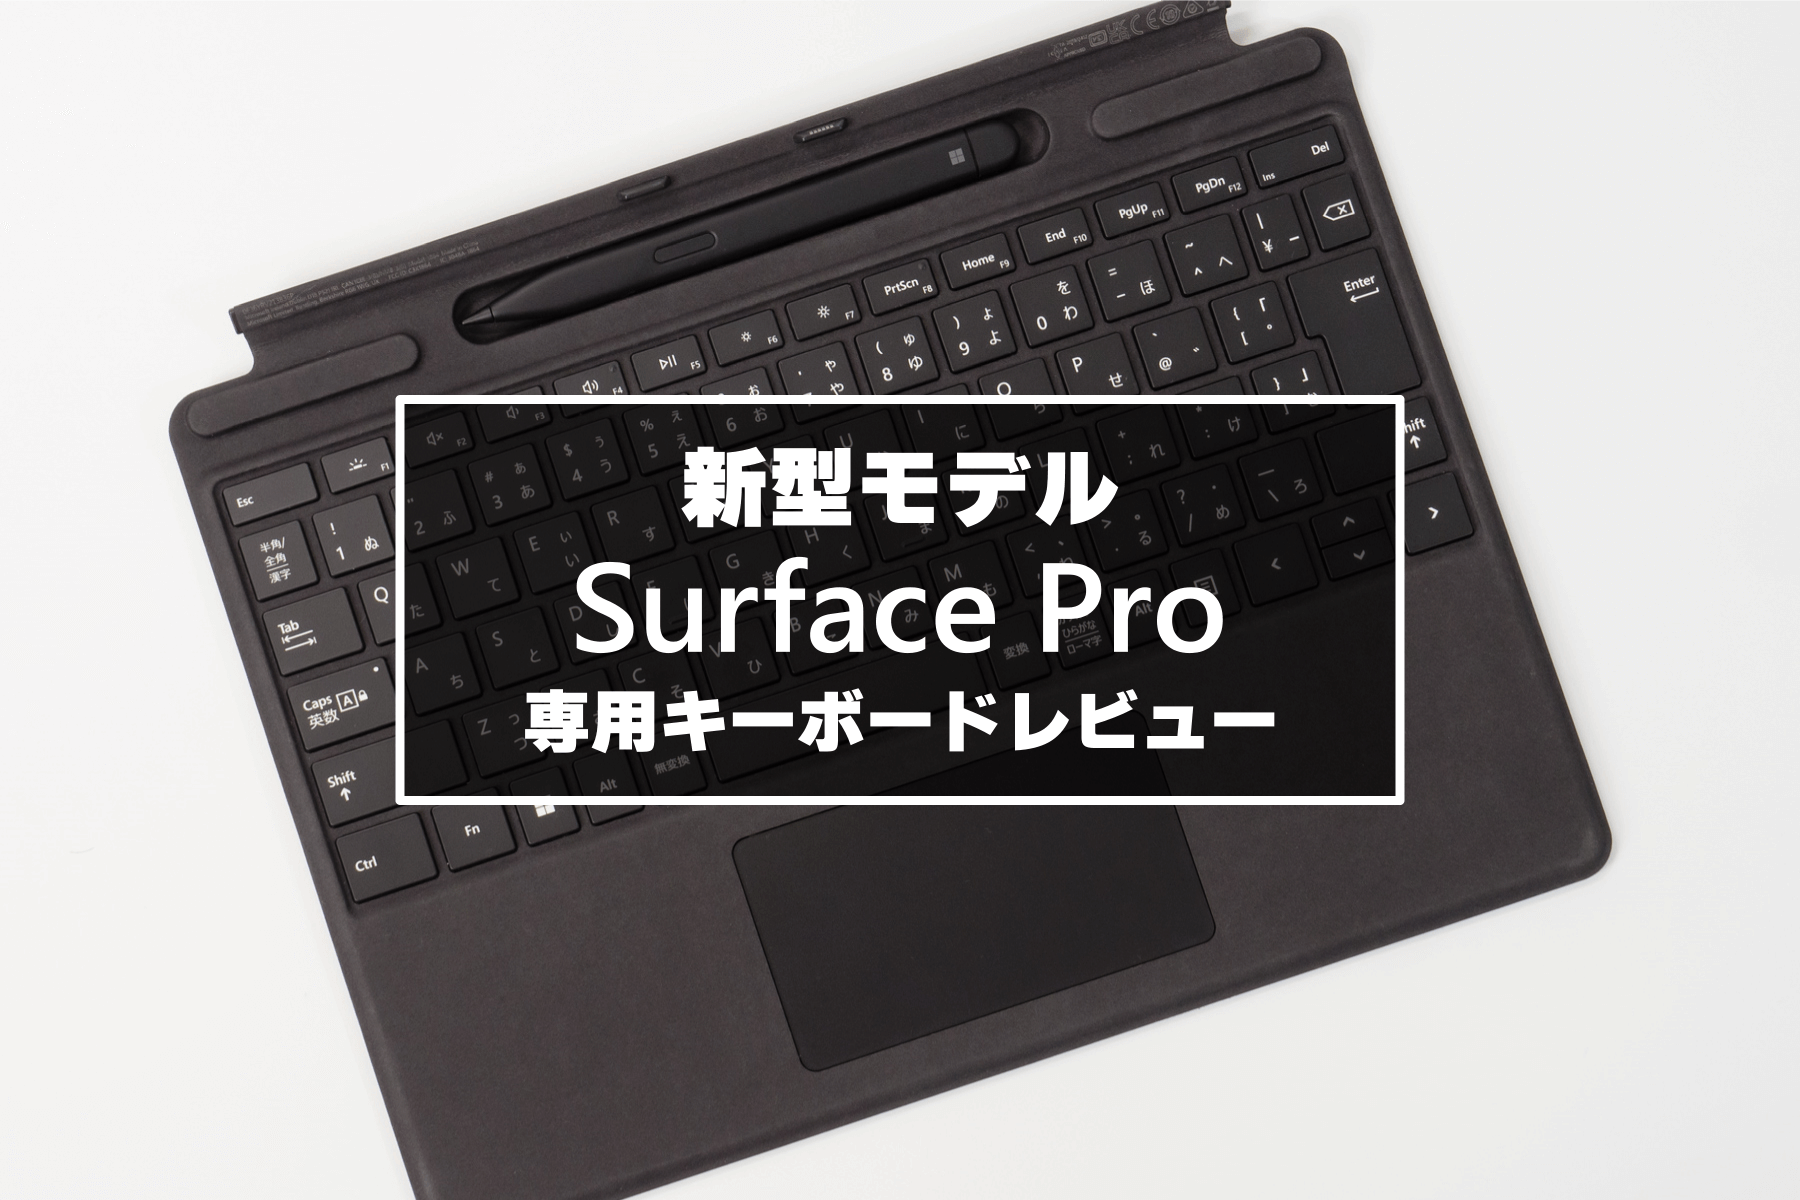 SurfacePro7 Core i7/16GB/256GB （キーボード付属） | skisharp.com